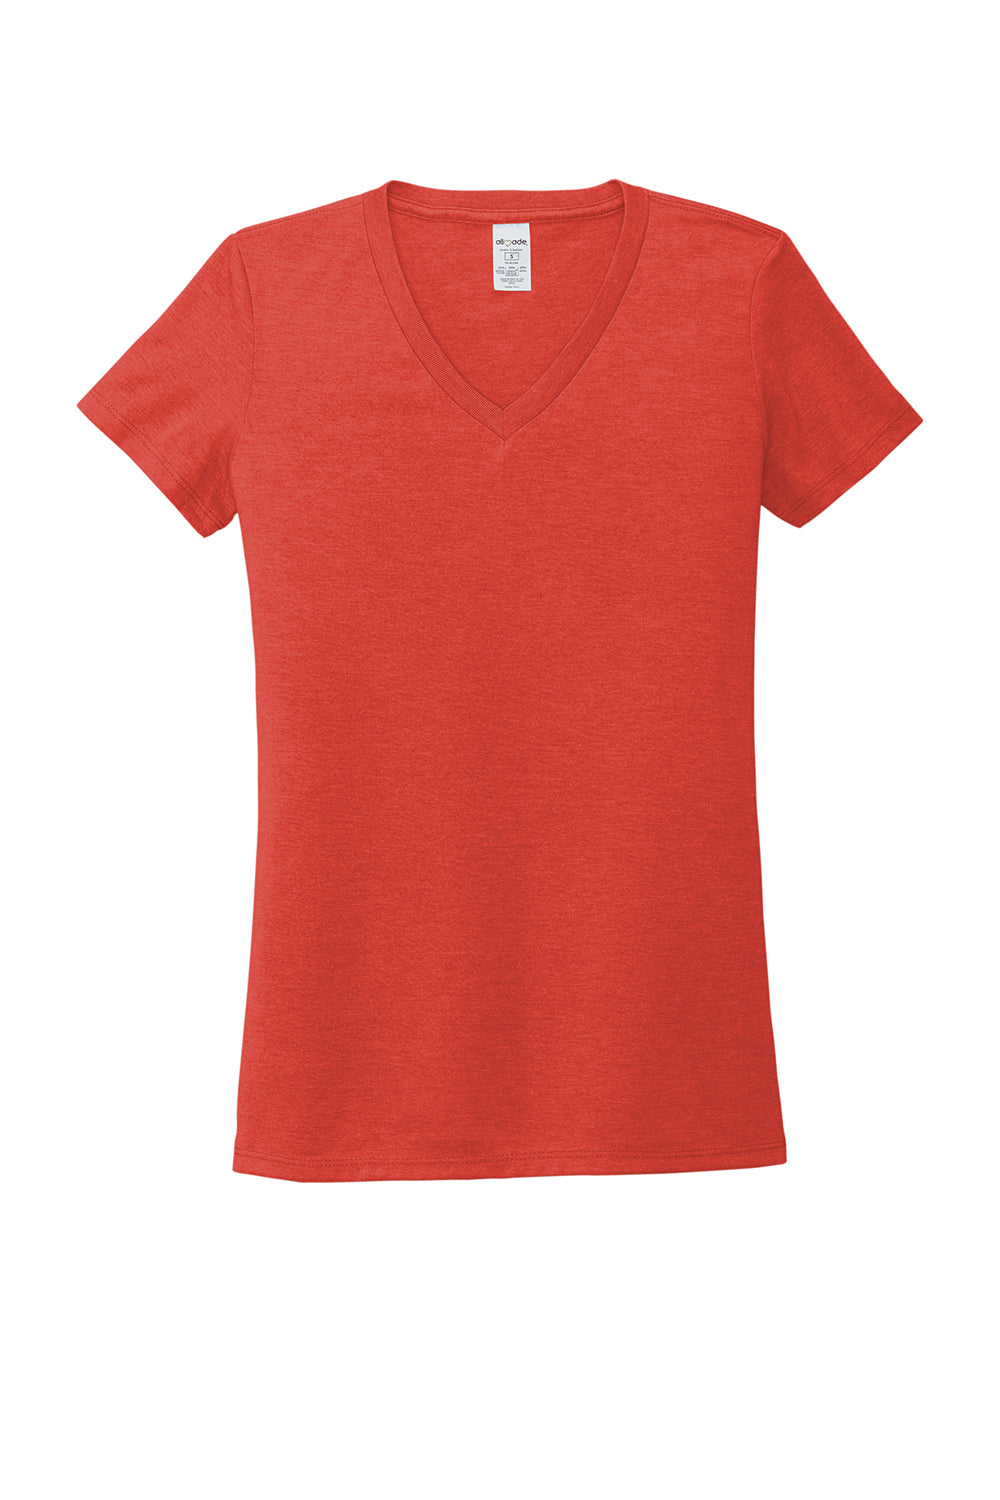 Allmade AL2018 Womens Short Sleeve V-Neck T-Shirt Desert Sun Red Flat Front